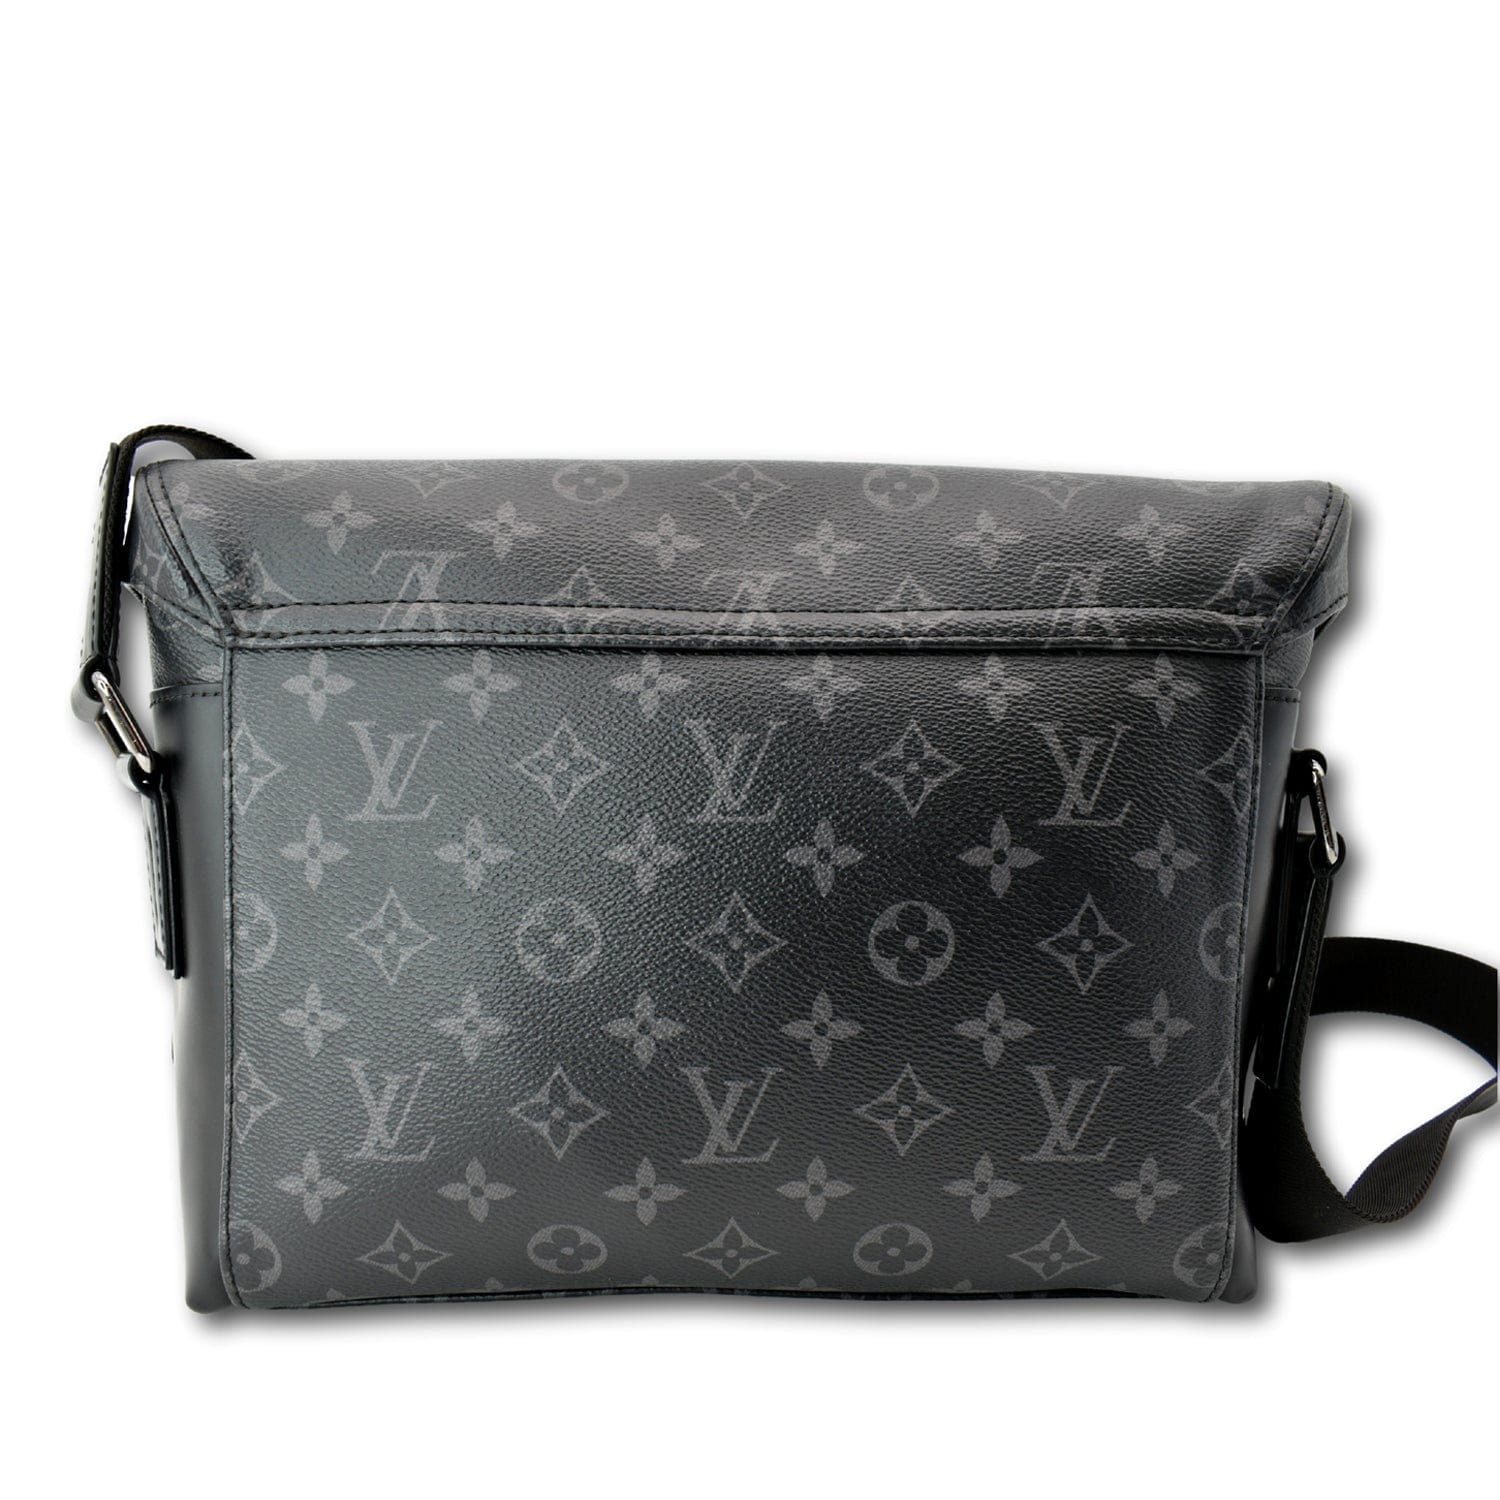 10 Louis Vuitton Bags That Should Be On Your Radar - PurseBop